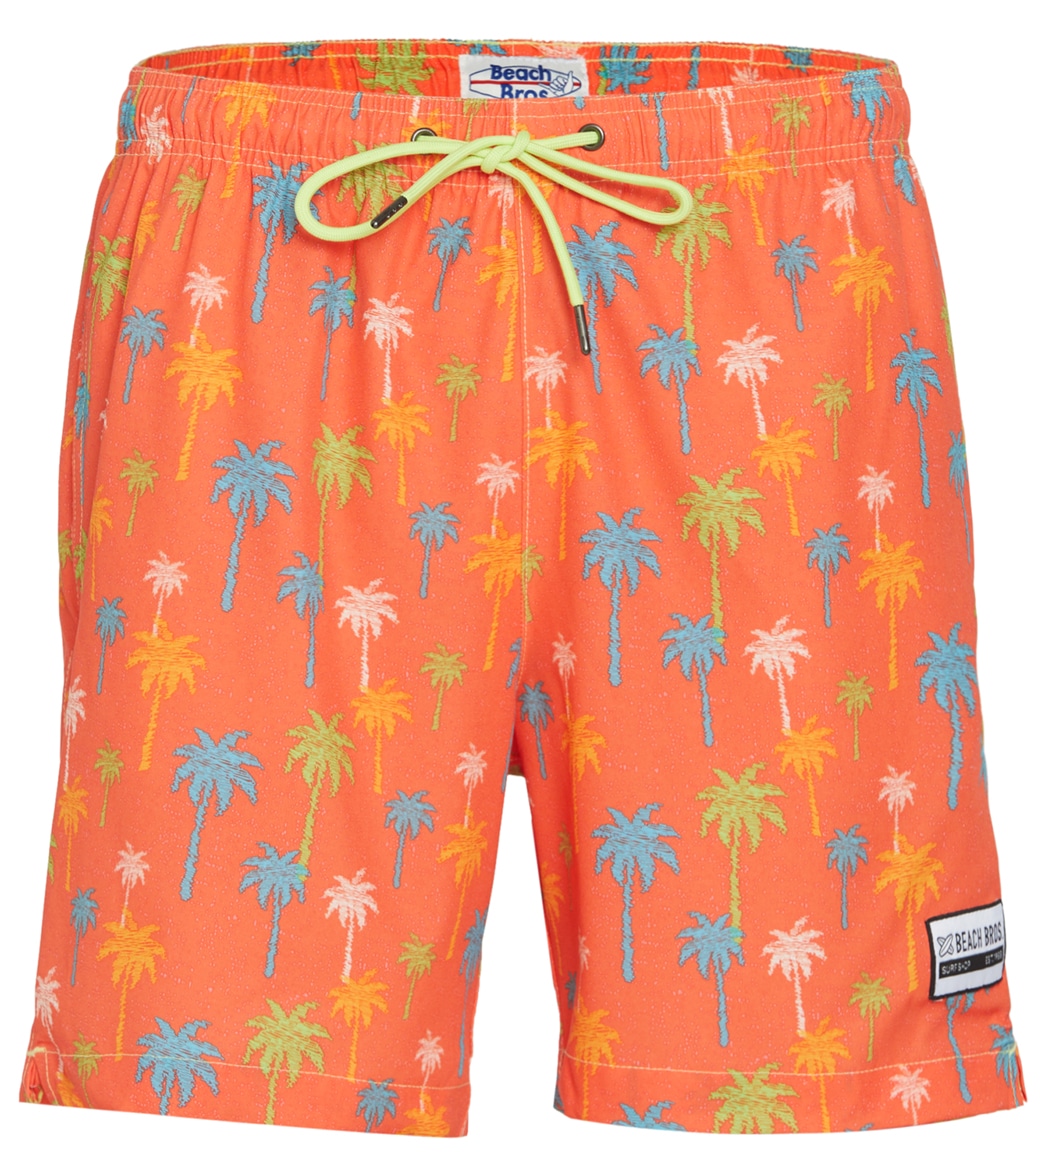 Beach Bros Men's Palm Tree Swim Trunks - Red Large Polyester - Swimoutlet.com